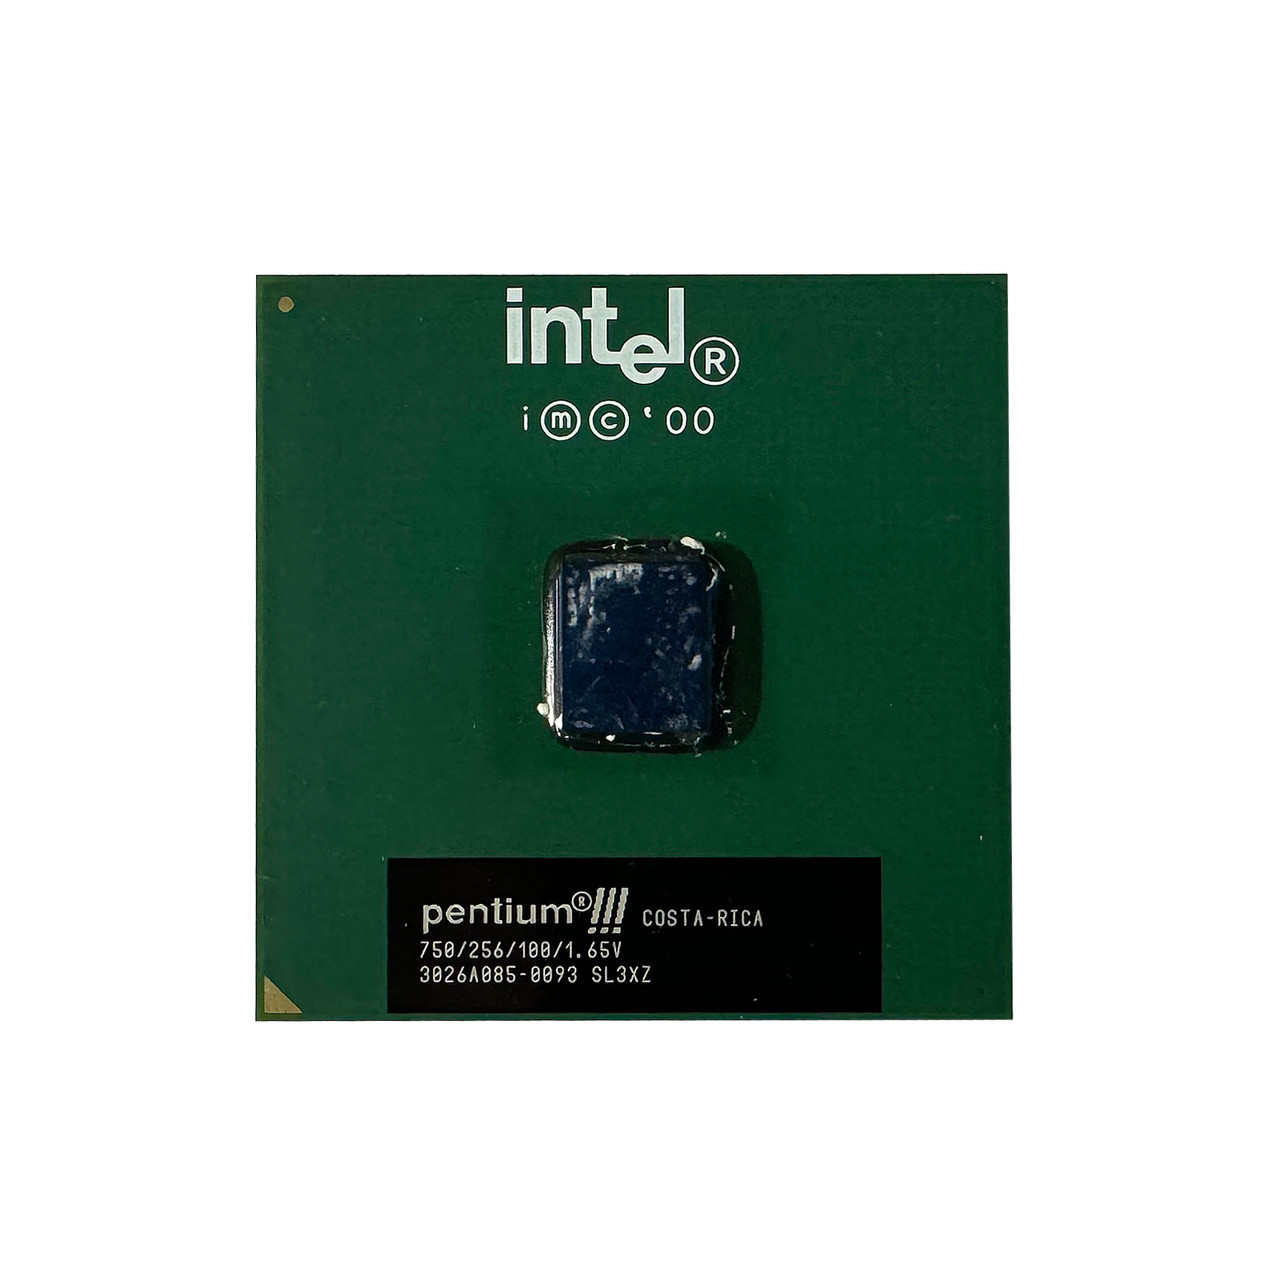 Intel SL3XZ PIII 750Mhz 256K 100FSB 1.65V Processor